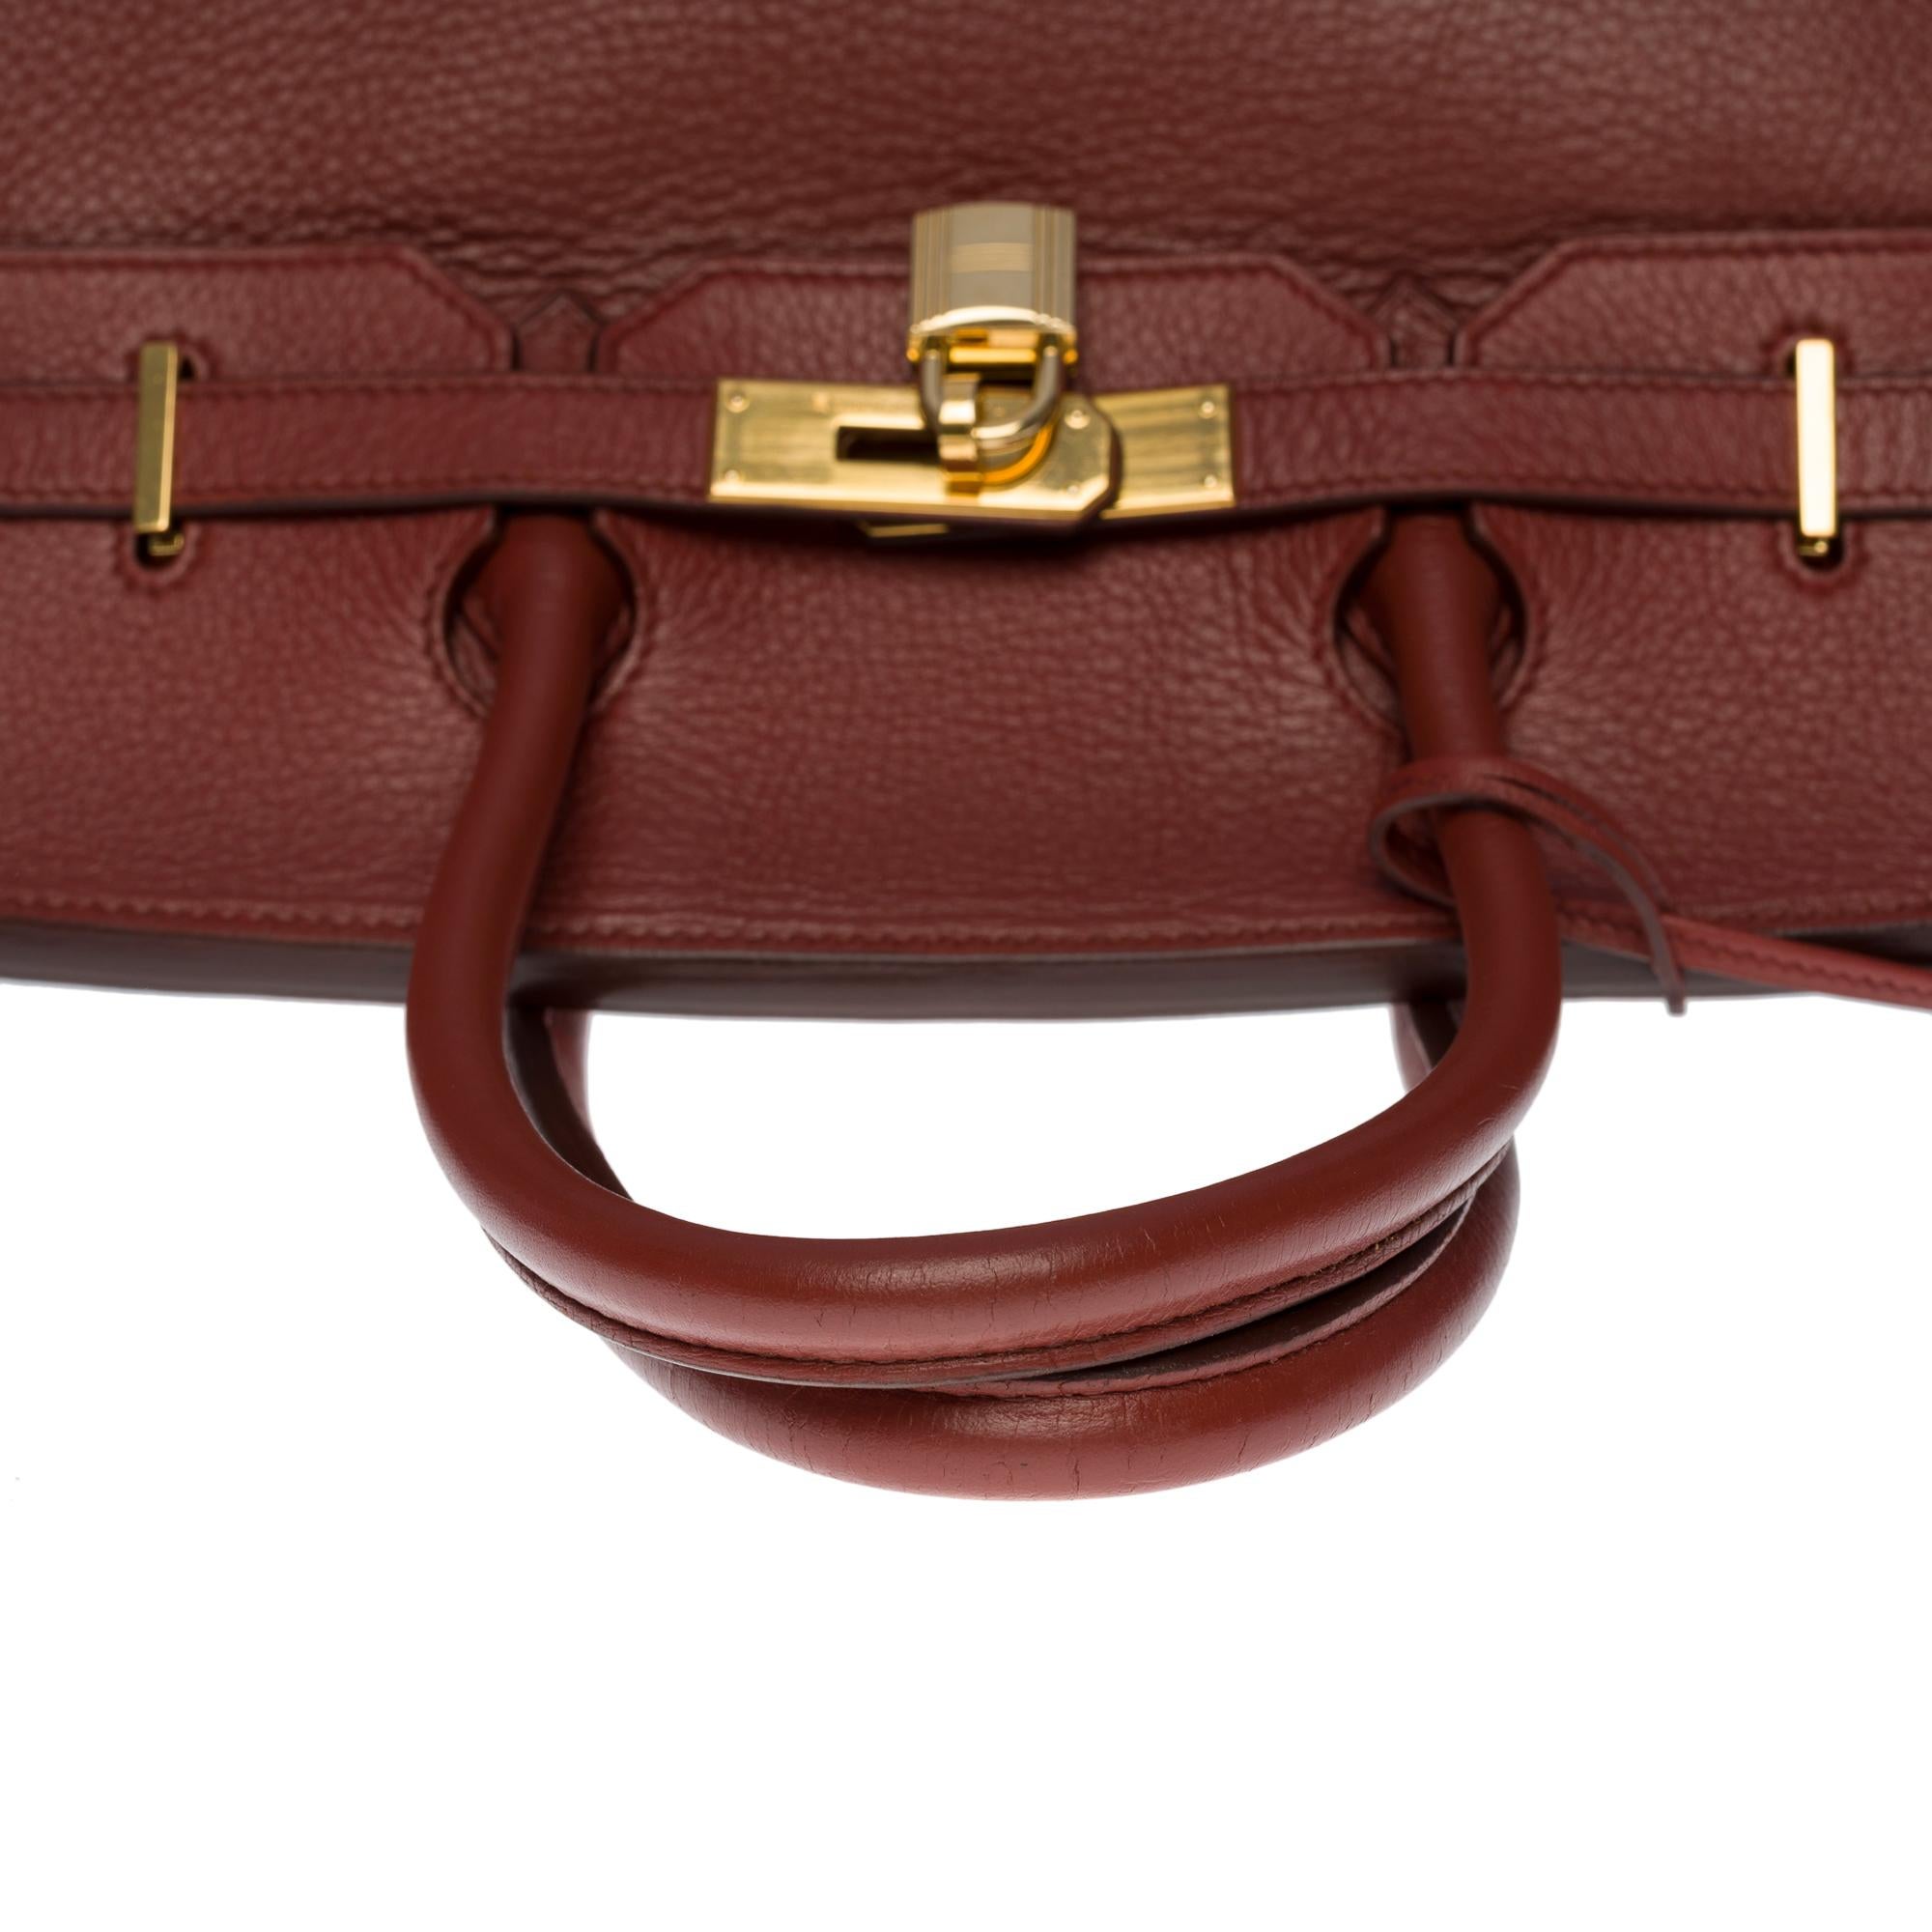 Amazing Hermès Birkin 35 handbag in Cognac Togo leather, GHW 1